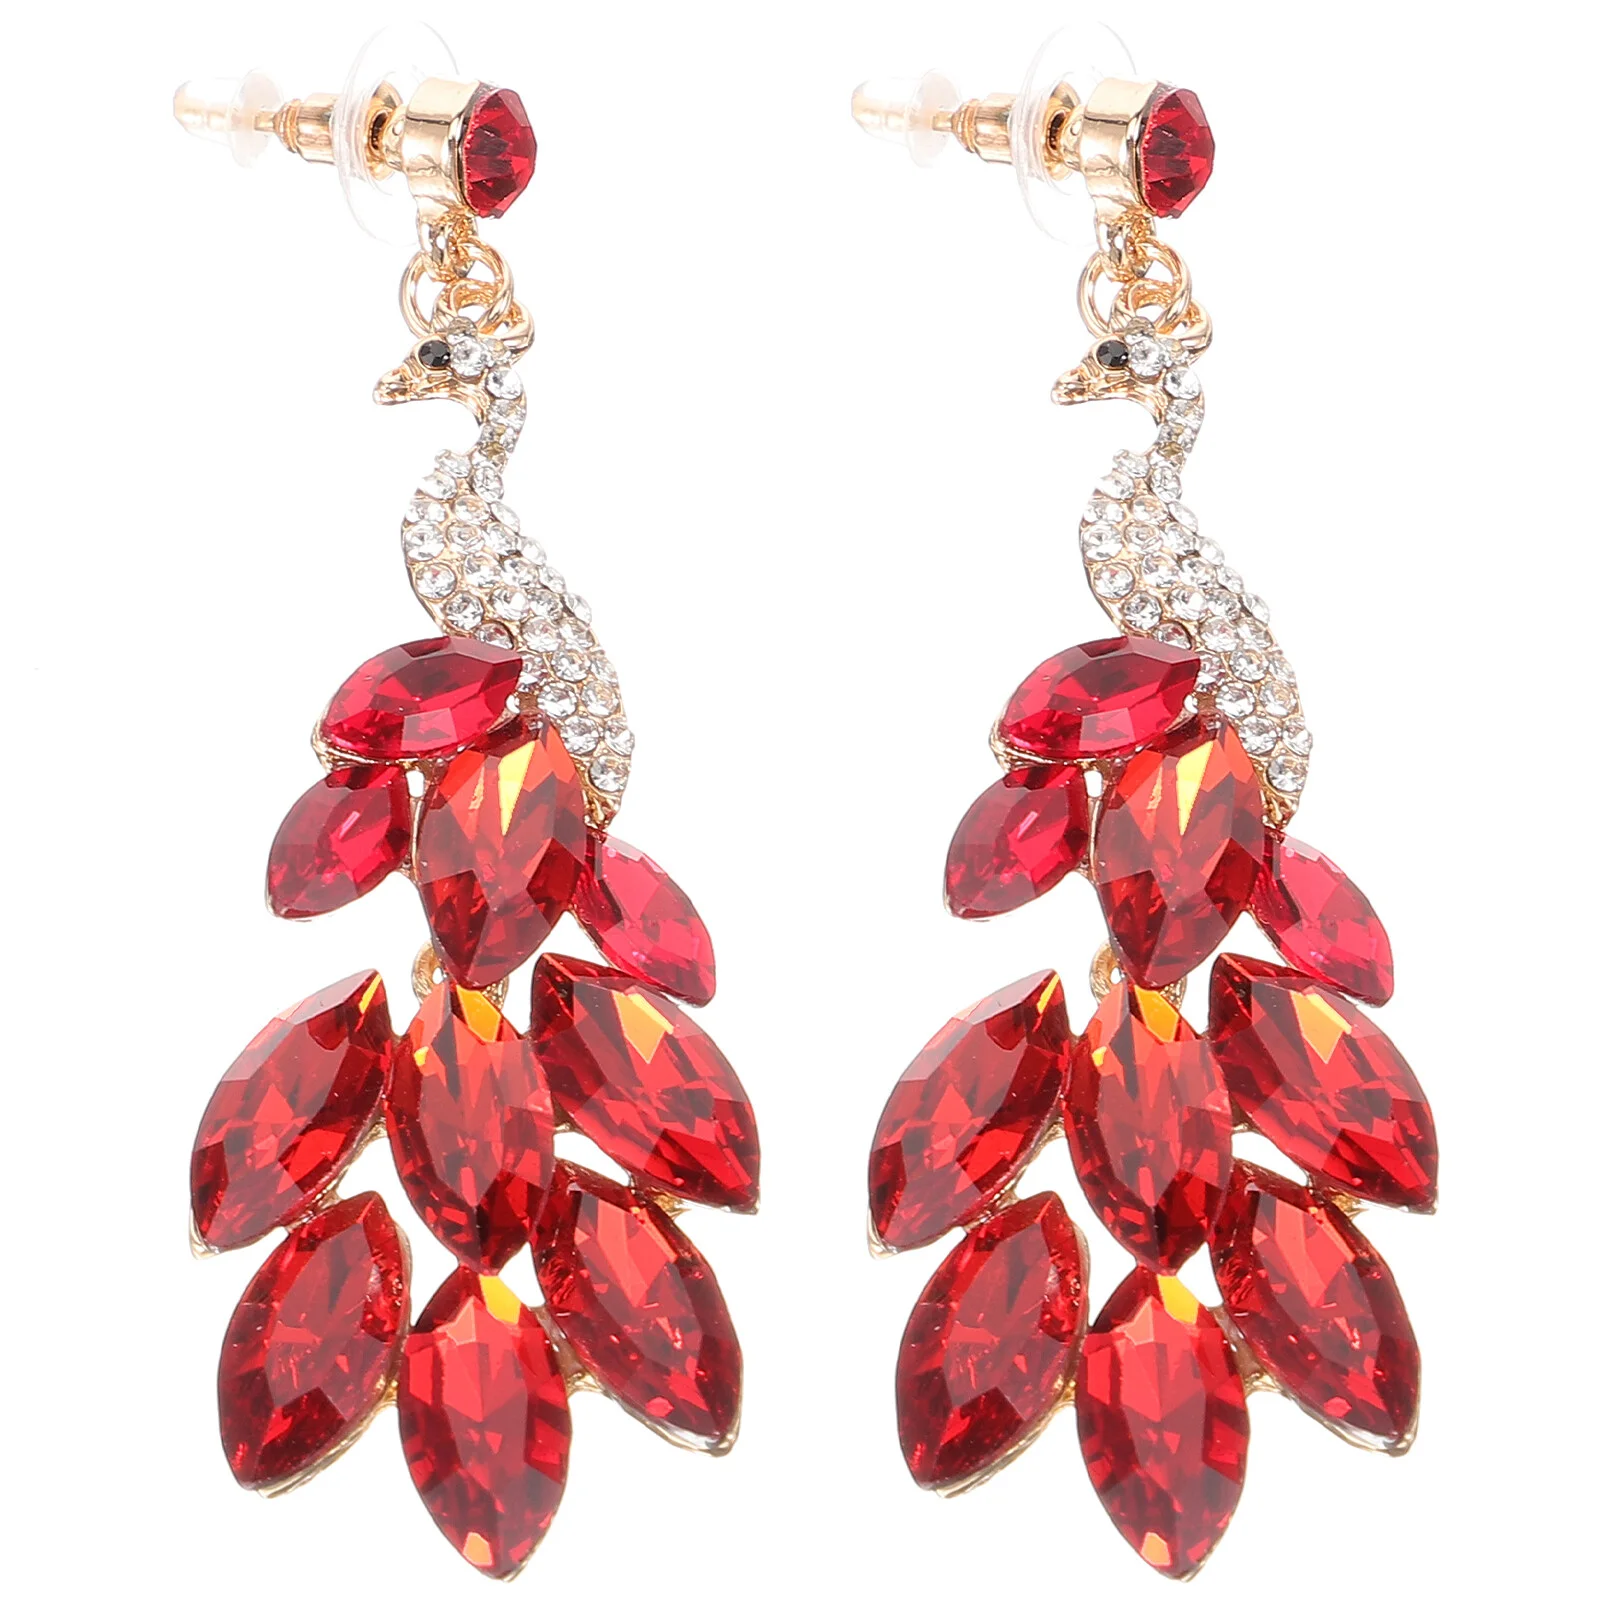 

Peacock Women's Earrings Rhinestone Trendy Statement Fashion Jewelry Gifts Aesthetic Lockets